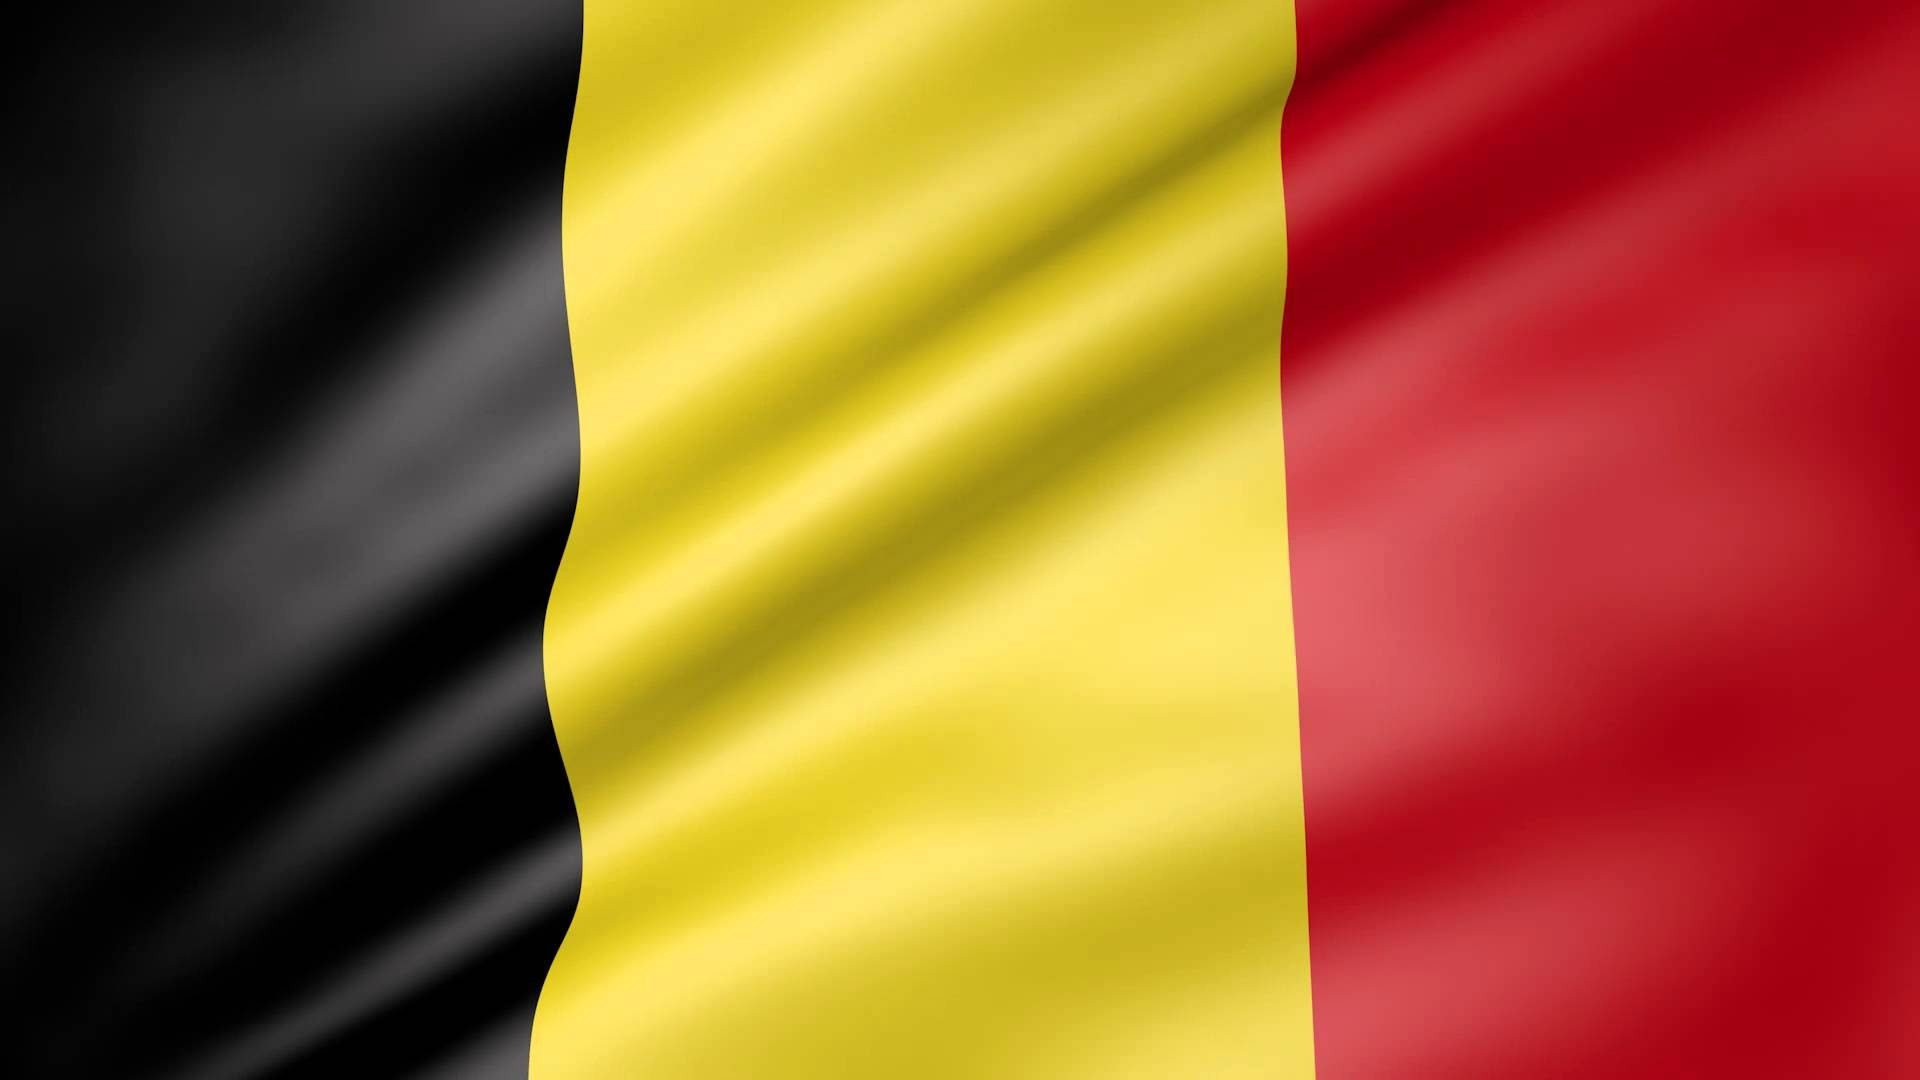 бельгия флаг и герб